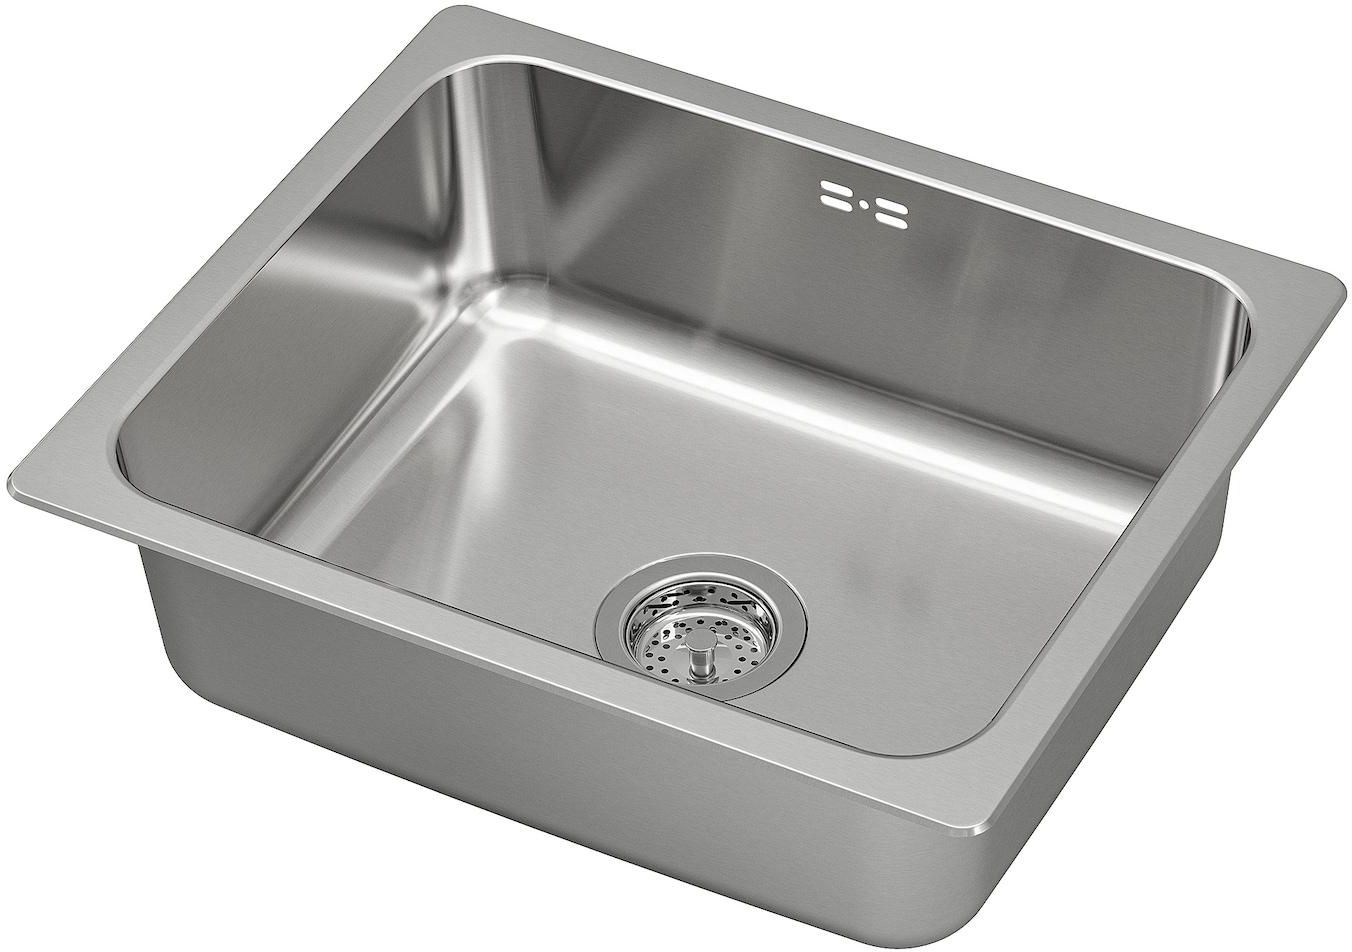 HILLESJÖN Inset sink, 1 bowl - stainless steel 56x46 cm